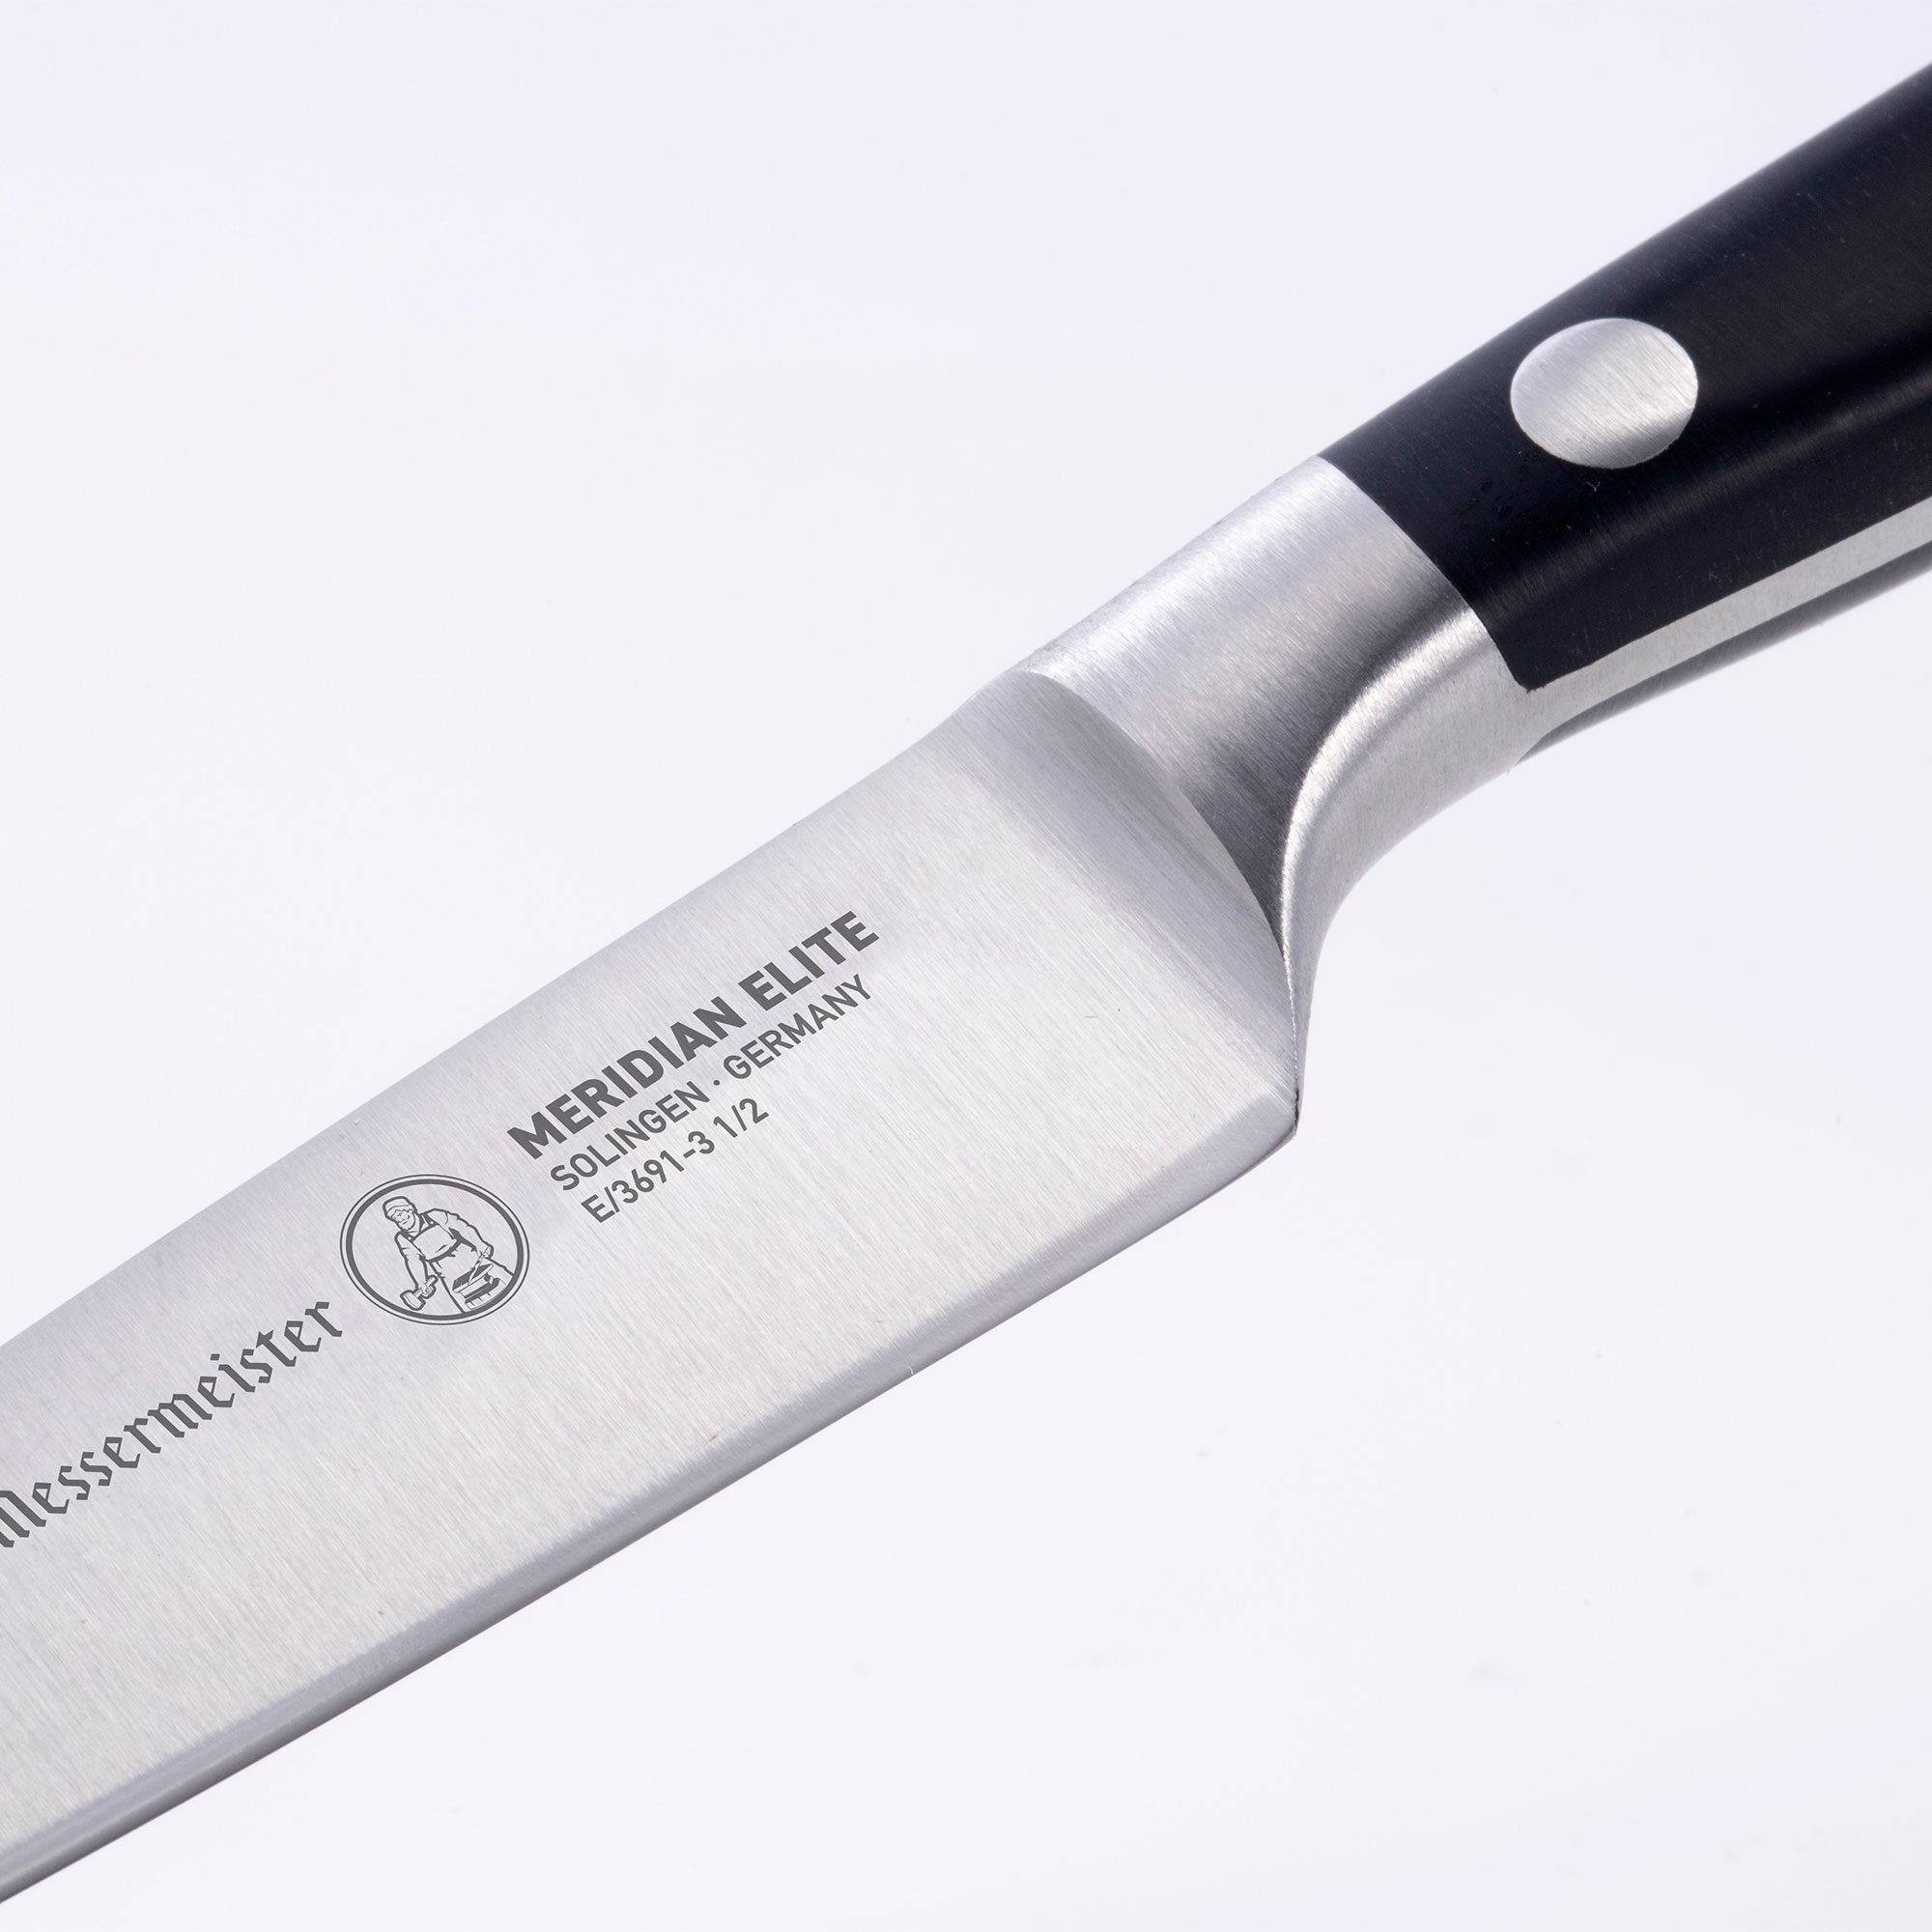 Meridian Elite 10 inch Chef's knife Messermeister